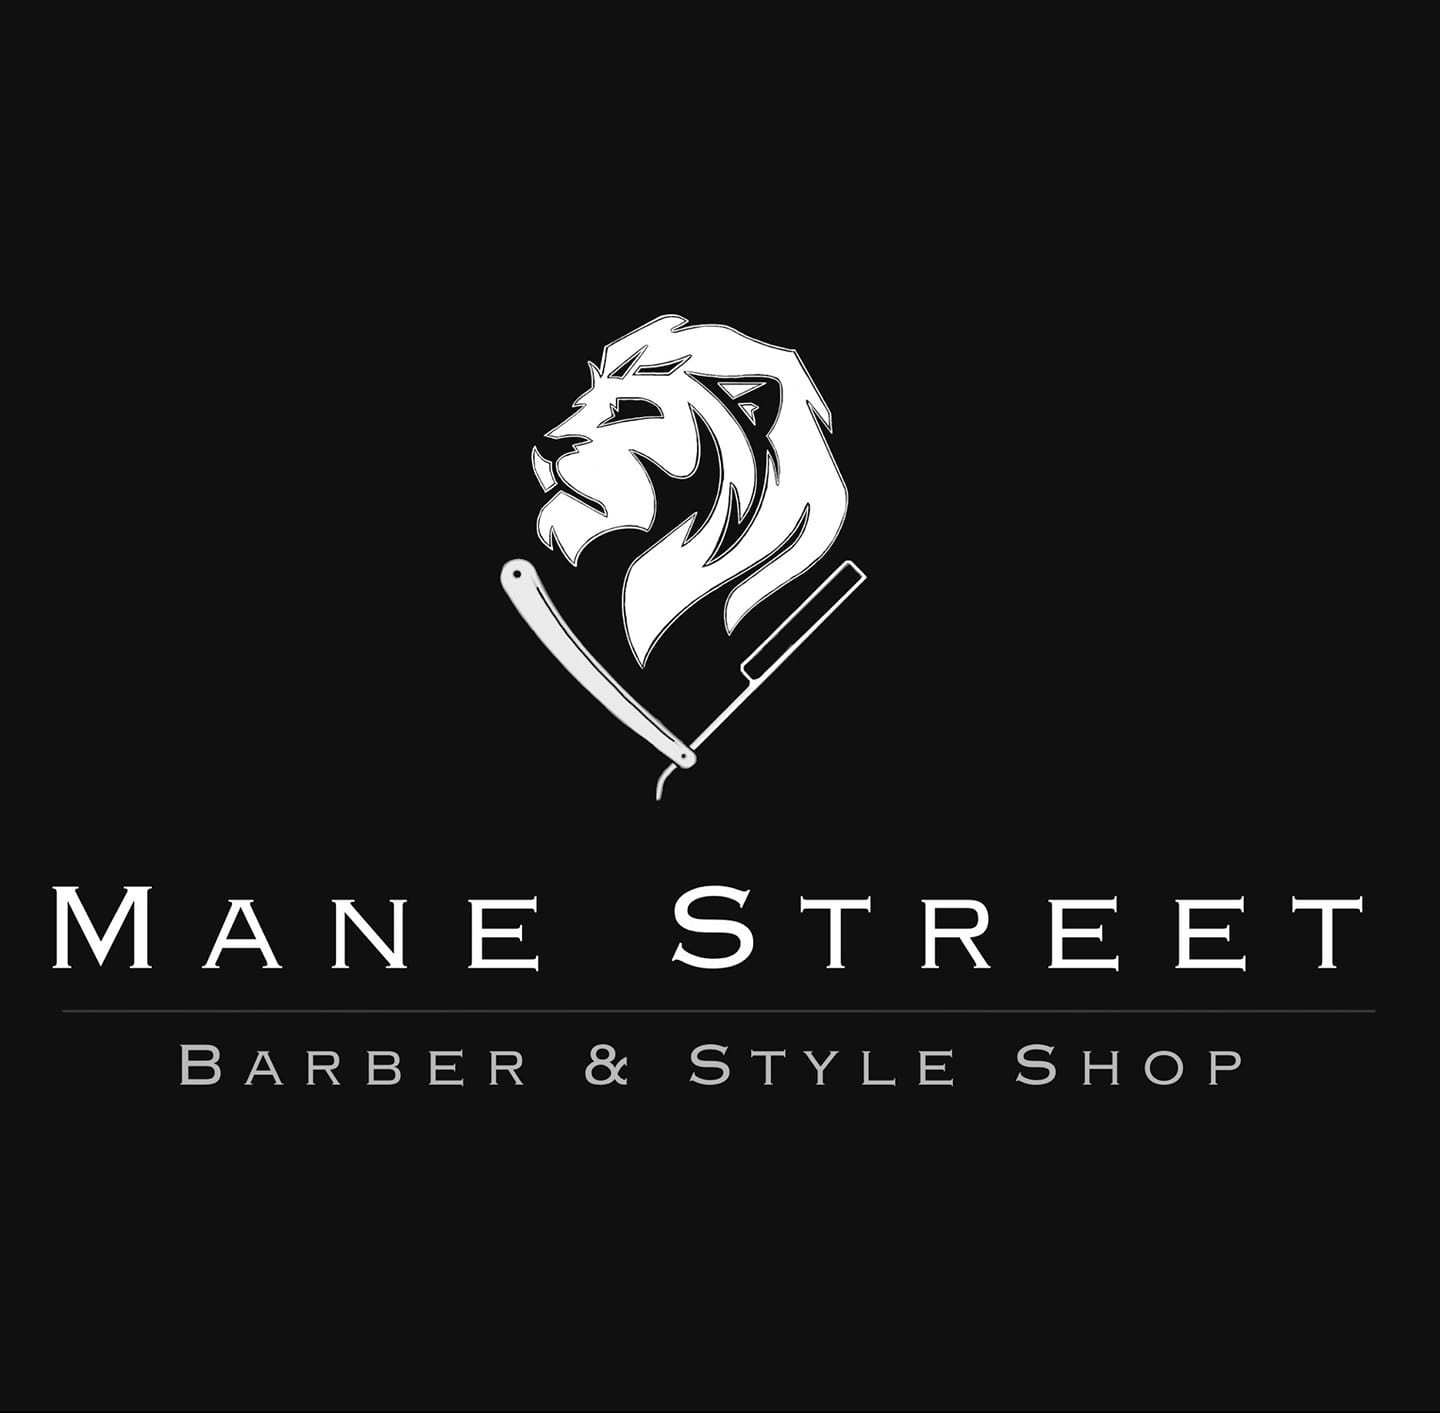 Mane Street Barber & Style Shop 844 Main St, Chipley Florida 32428